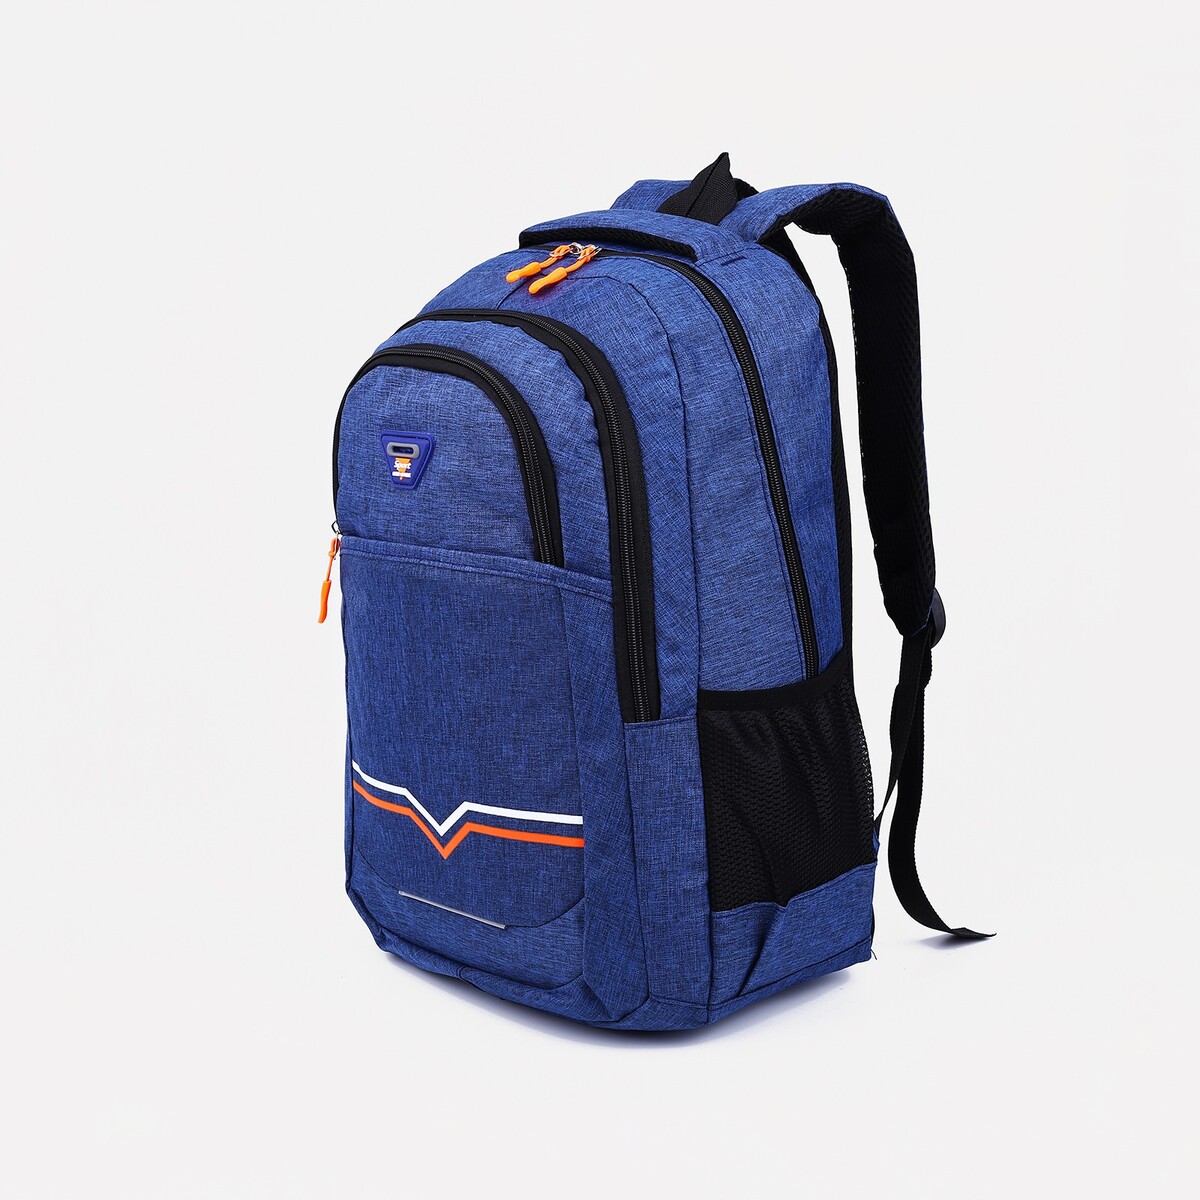 Рюкзак на молнии, 2 наружных кармана, цвет синий рюкзак на молнии 2 наружных кармана синий